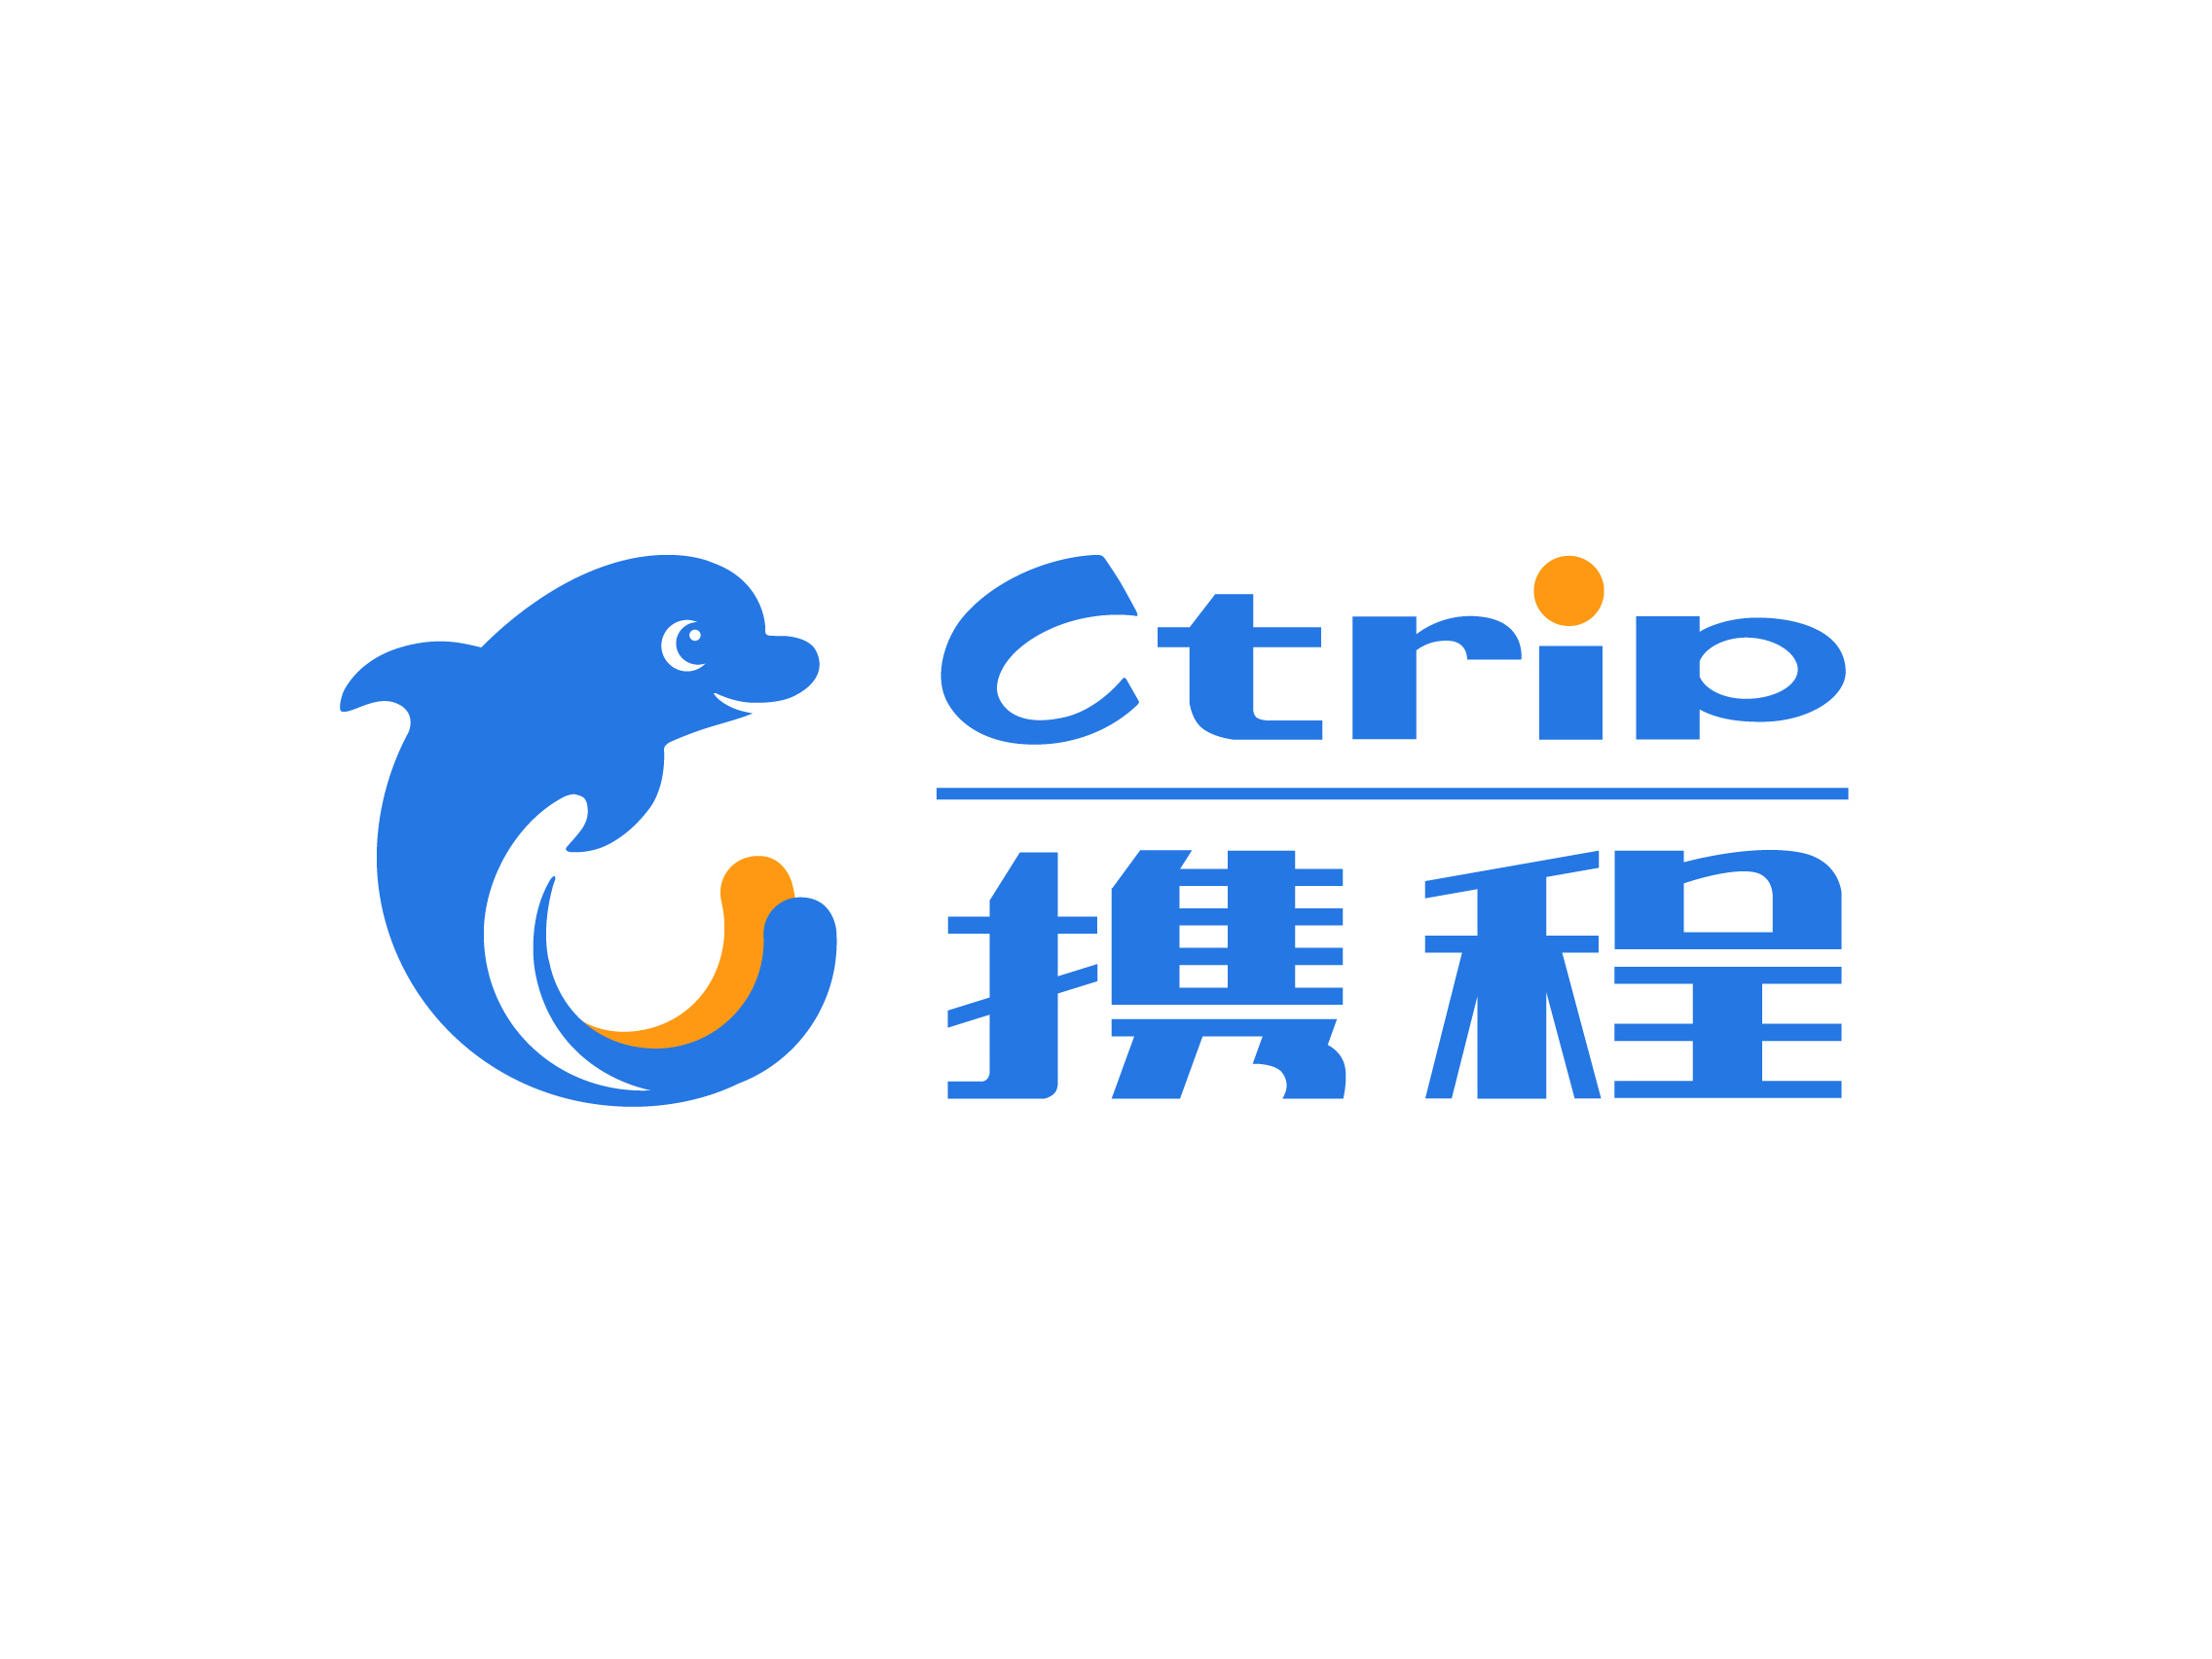 Ctrip-logo-and-wordmark.png